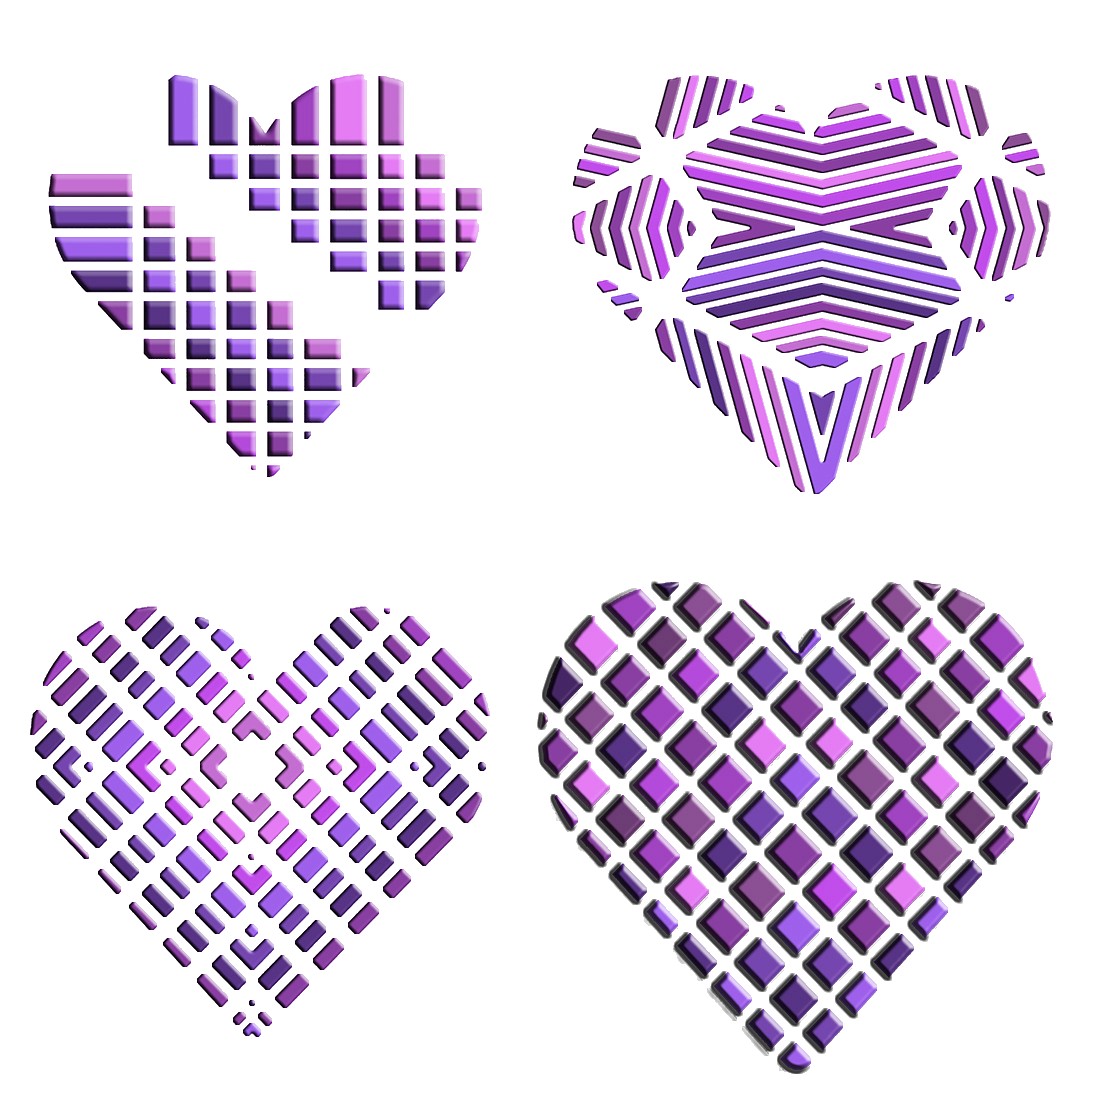 Gemstone Purple Hues Heart Shaped Cut Files cover image.